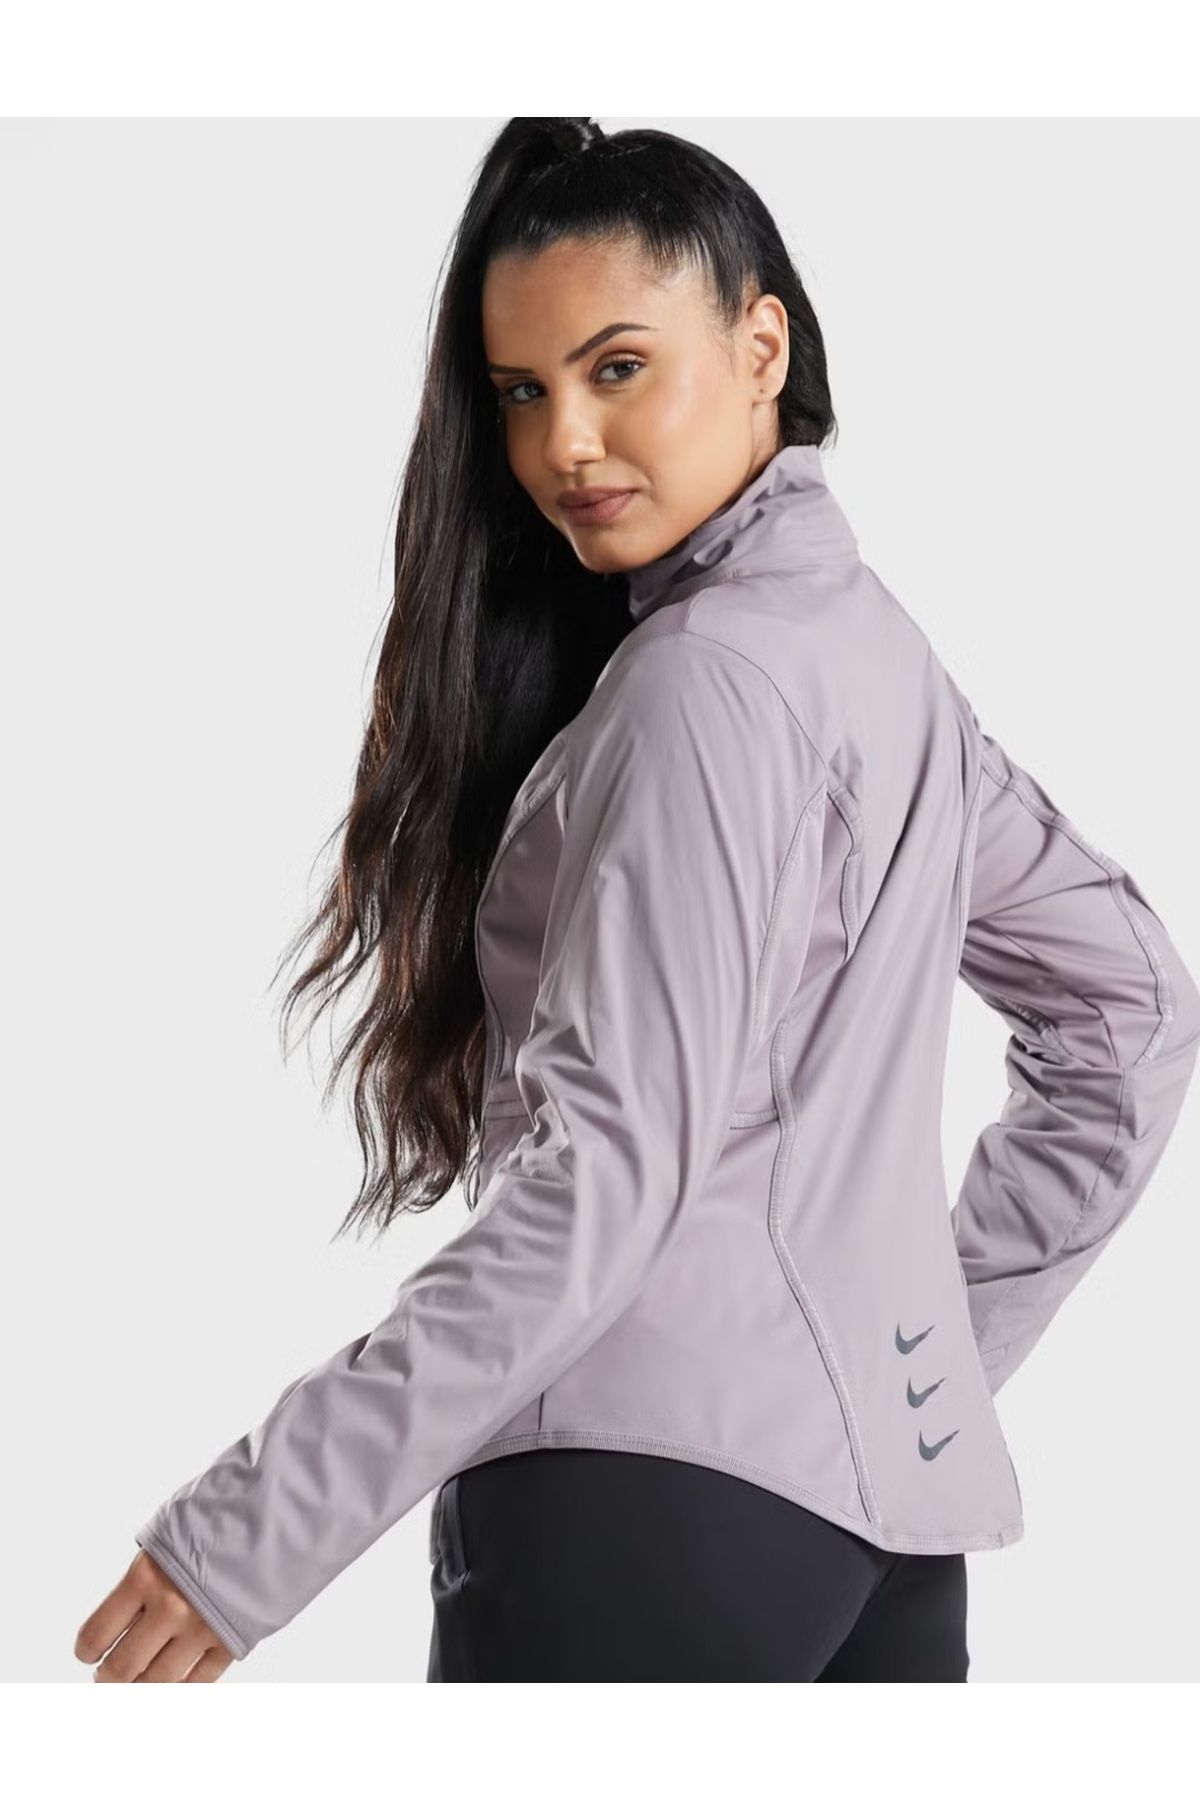 Nike Storm-FIT Kadın Koşu Ceketi DQ6561-531